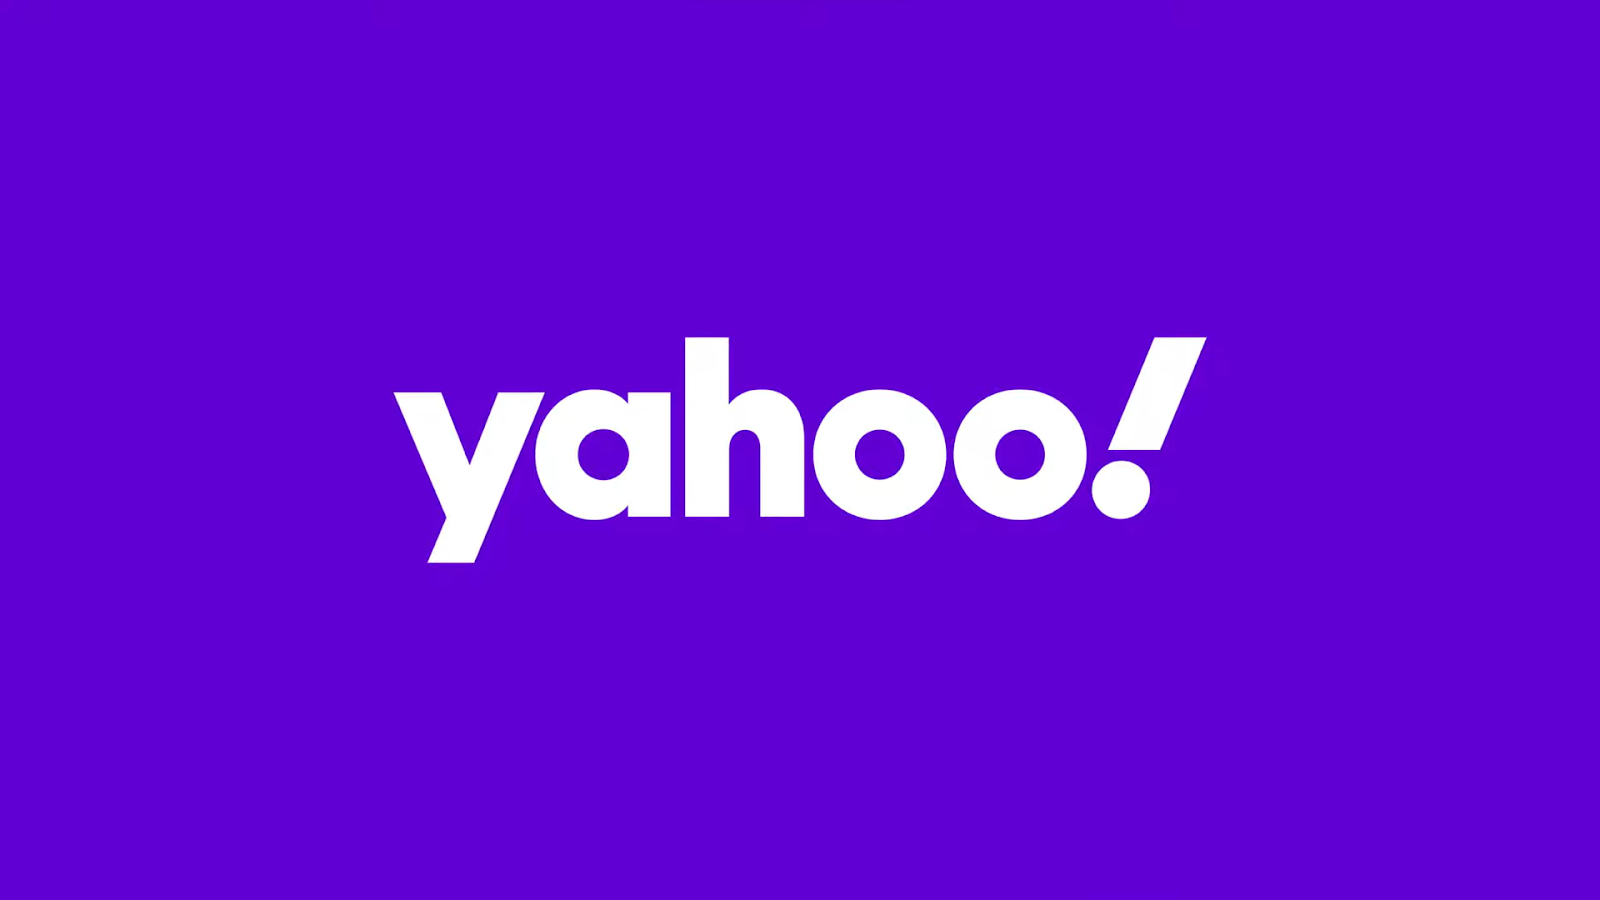 Yahoo's logo displayed on a purple background